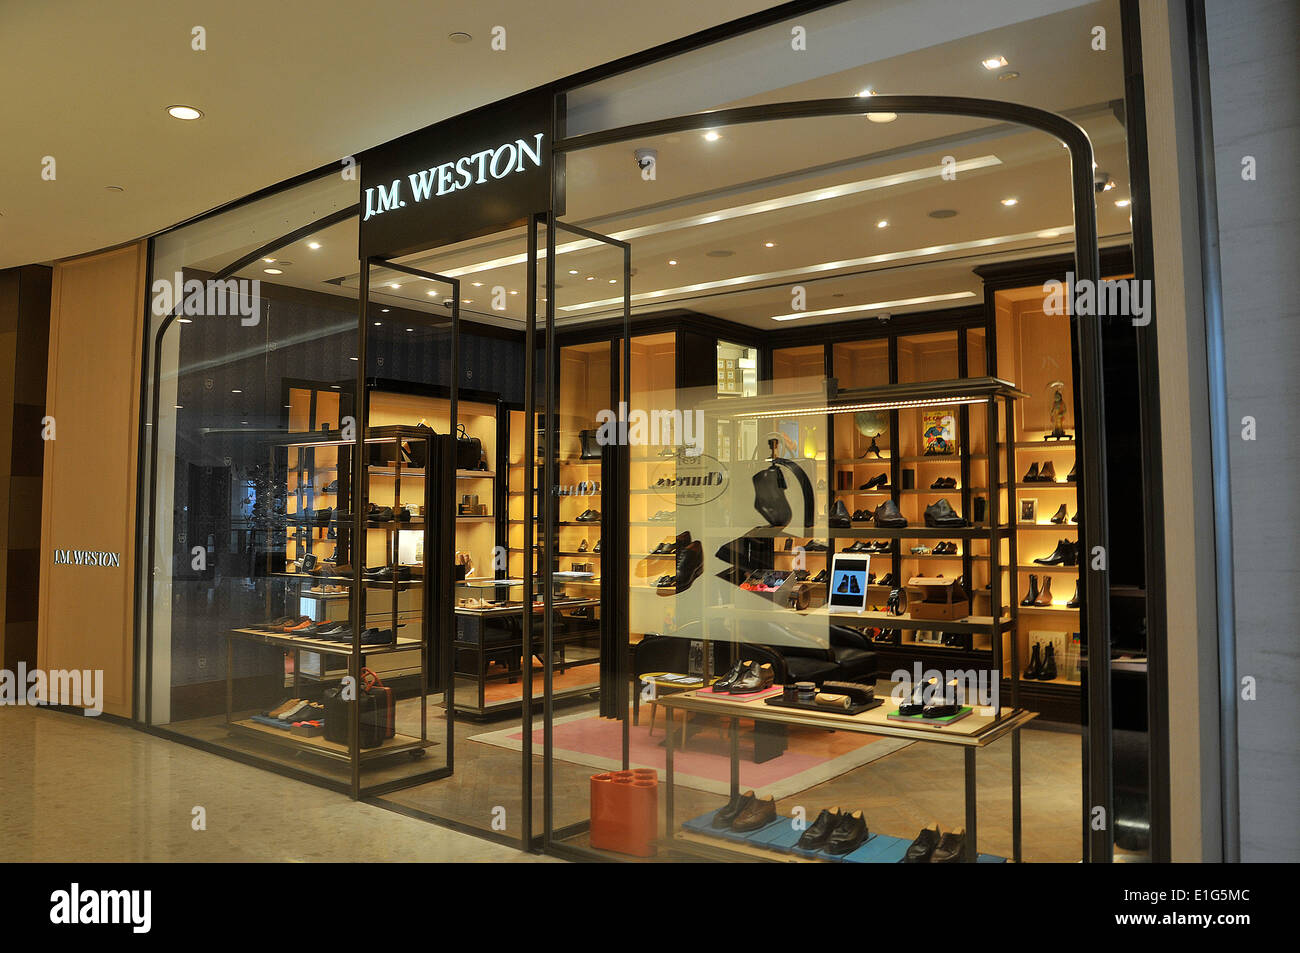 J.M.Weston boutique Ifc mall Pudong Shanghai China Stock Photo - Alamy